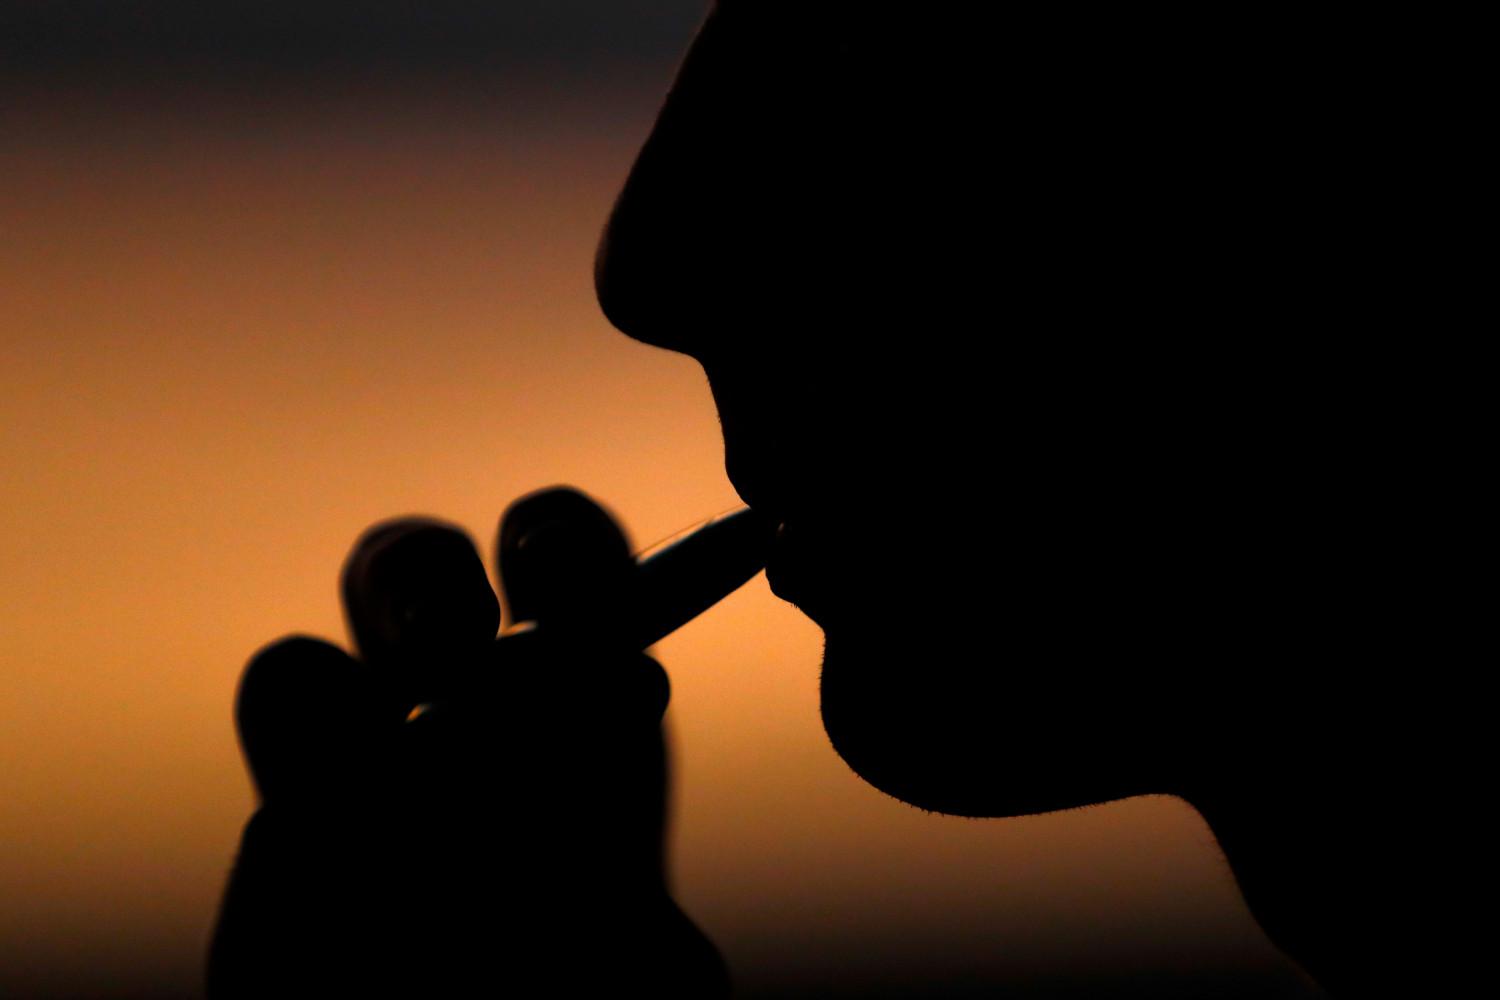 California Sues E-Cigarette Companies Selling to Minors Online